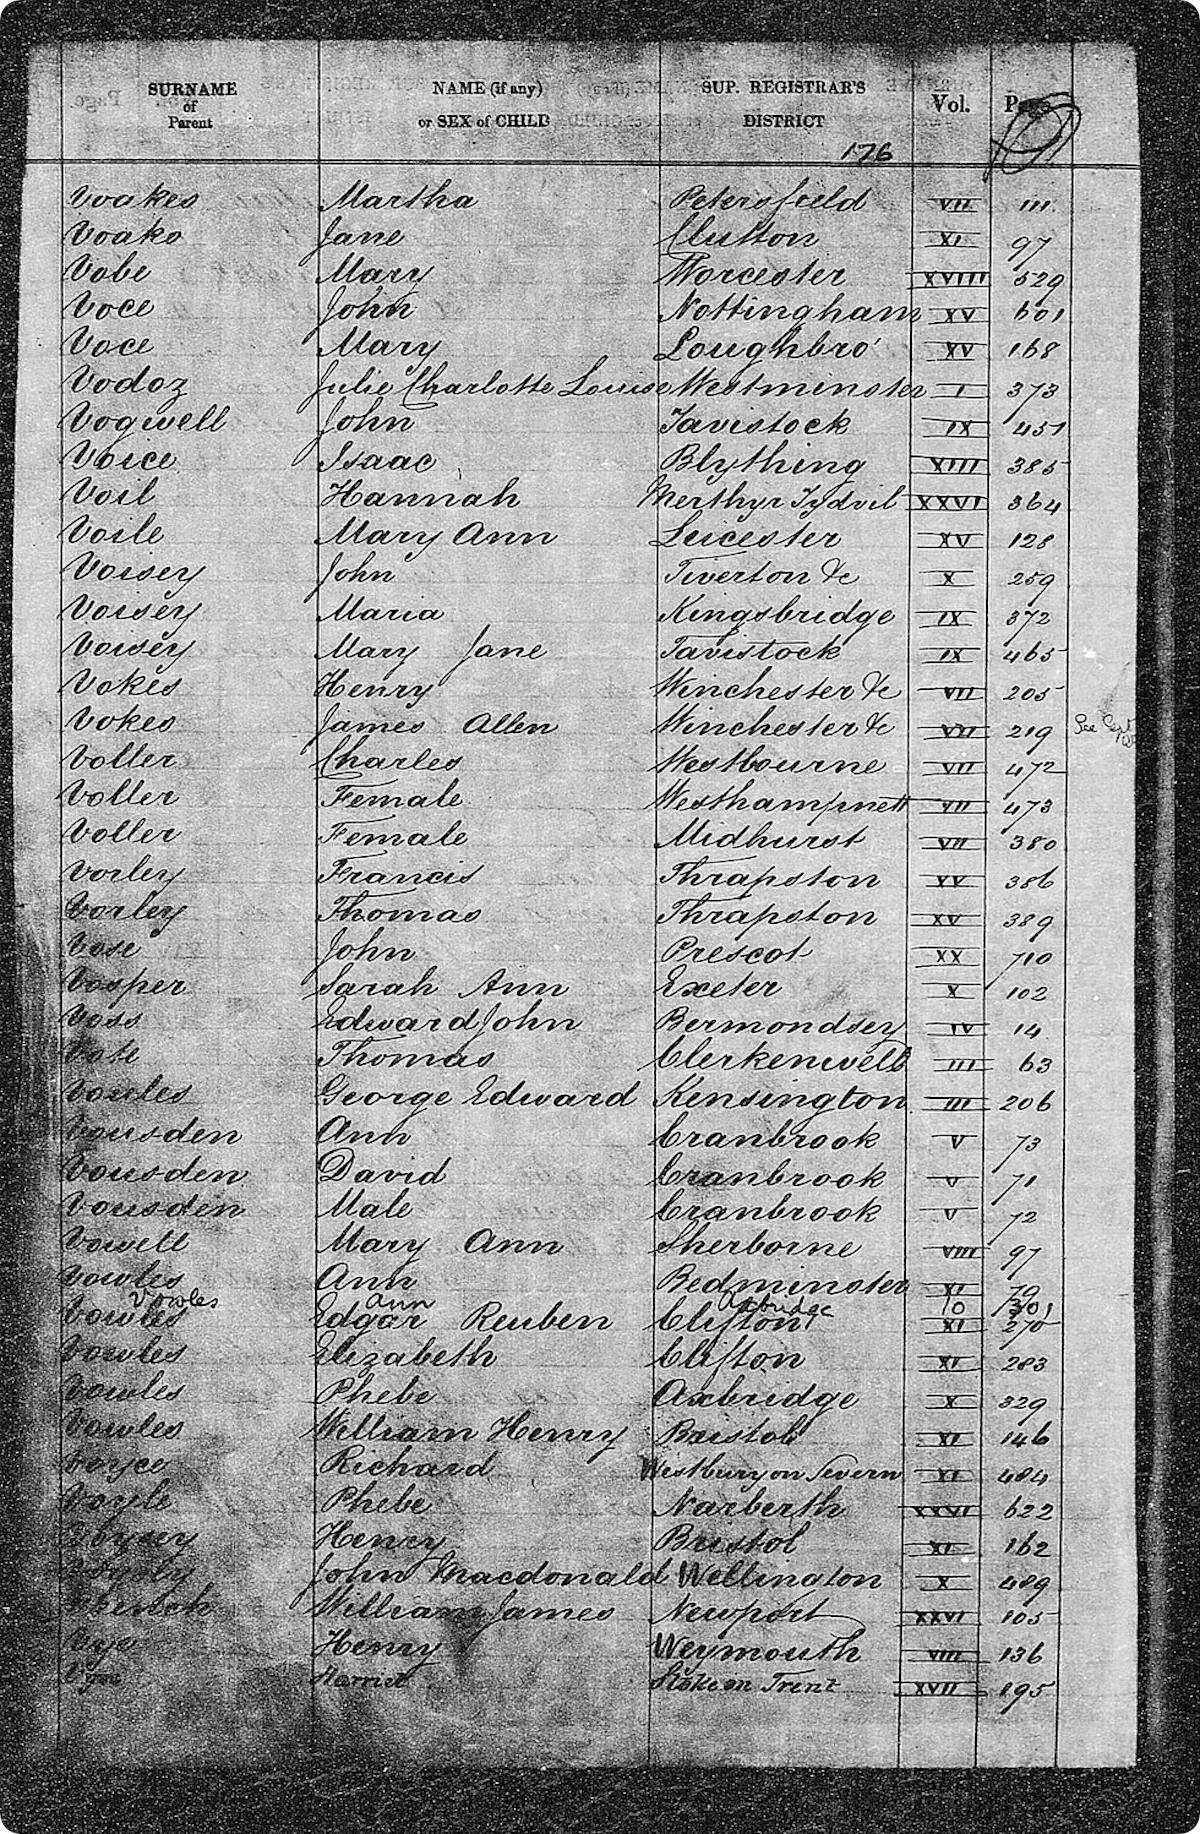 An 1839 GRO birth register